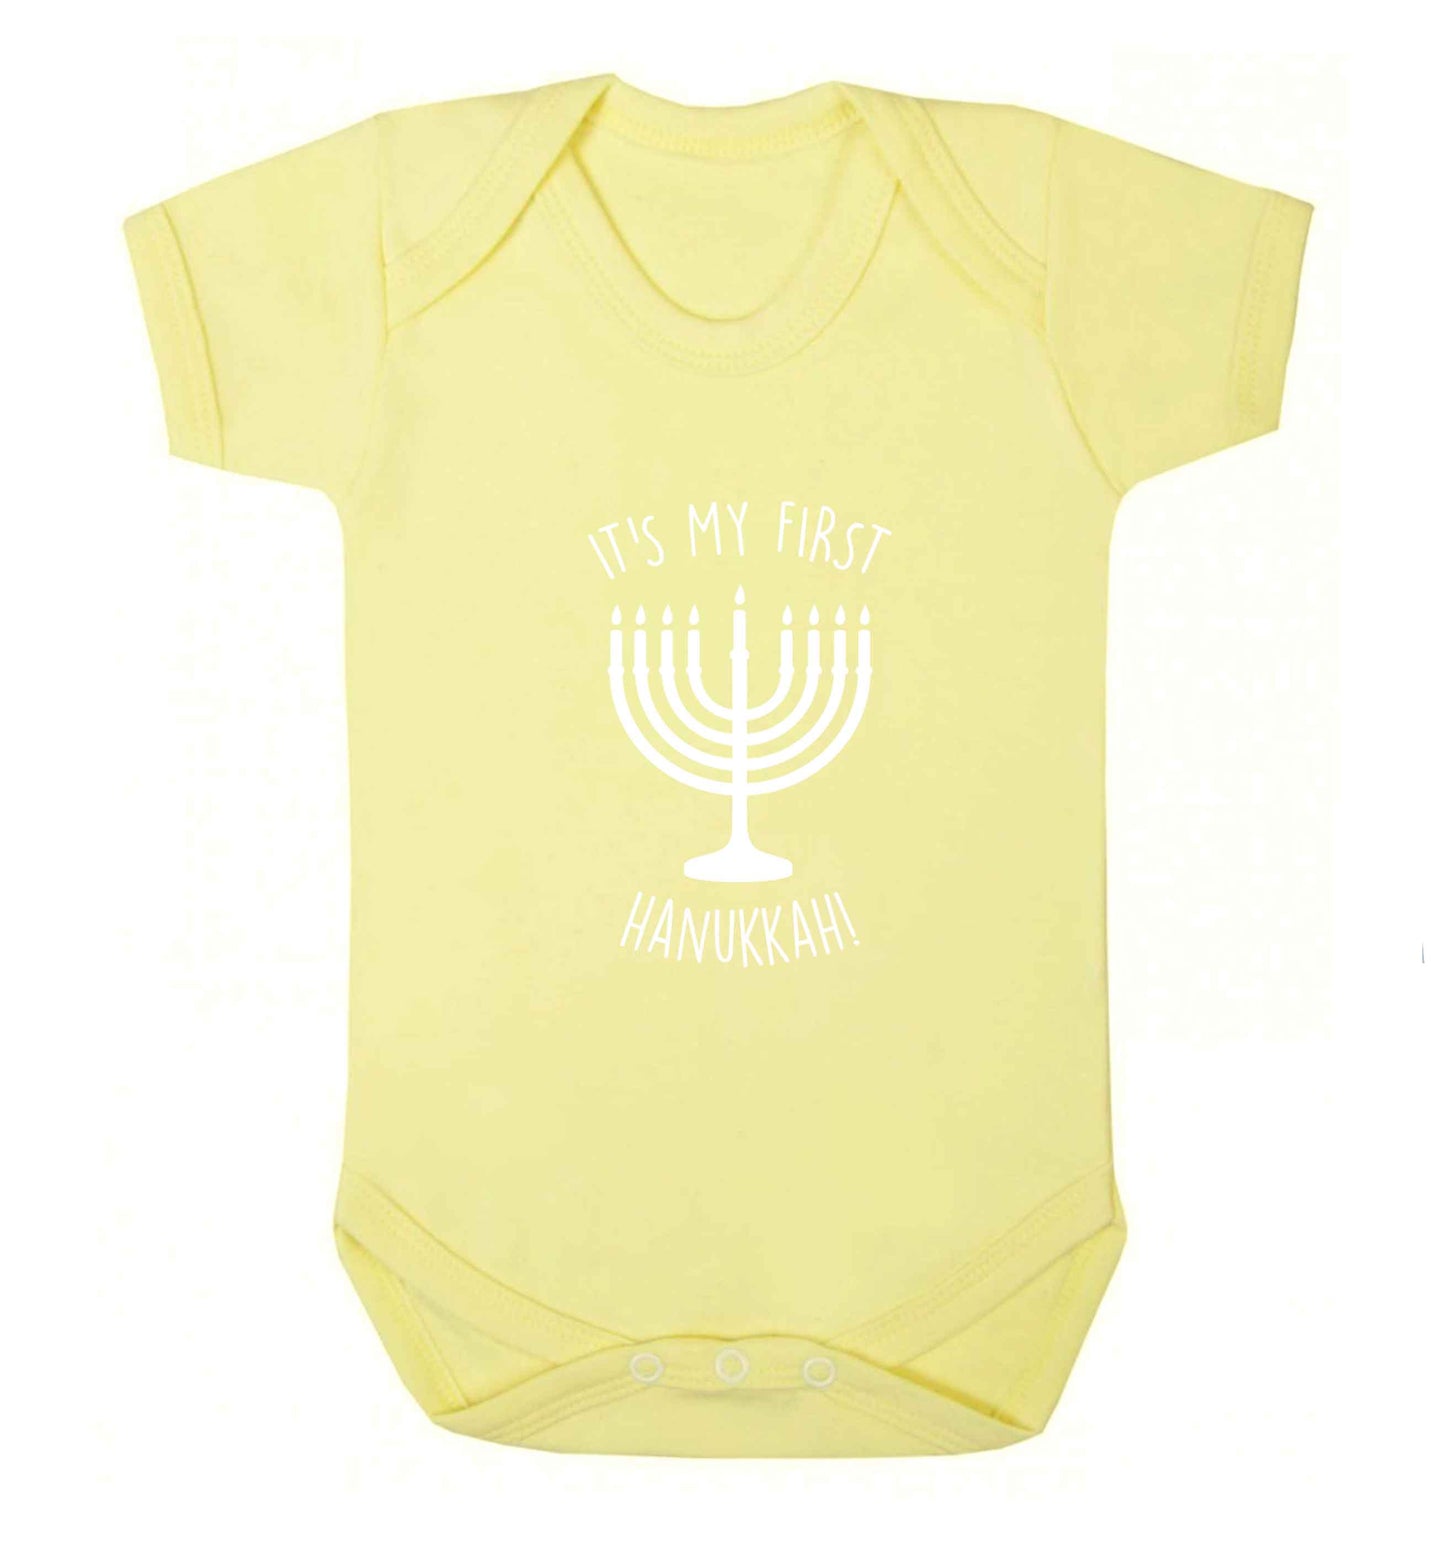 It's my first hanukkah baby vest pale yellow 18-24 months